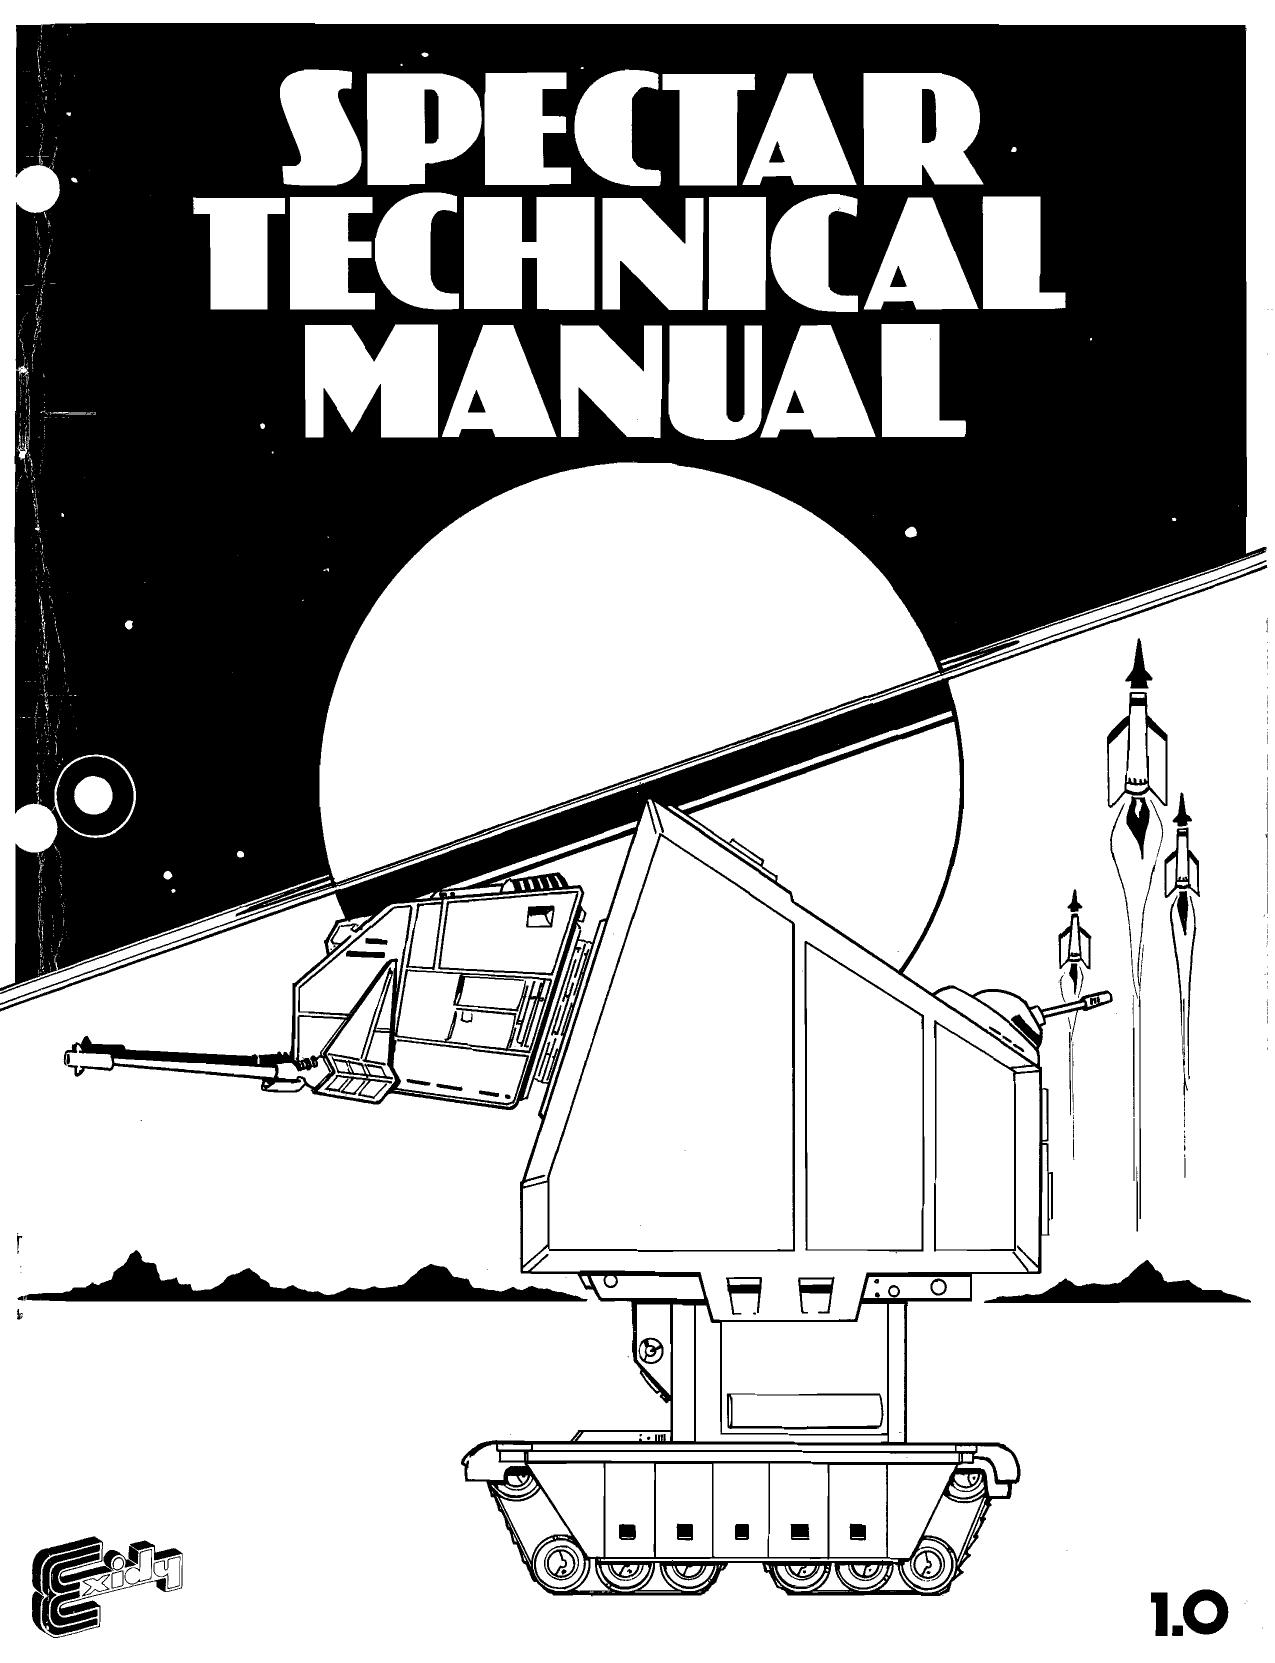 Spectar Technical Manual V1.0